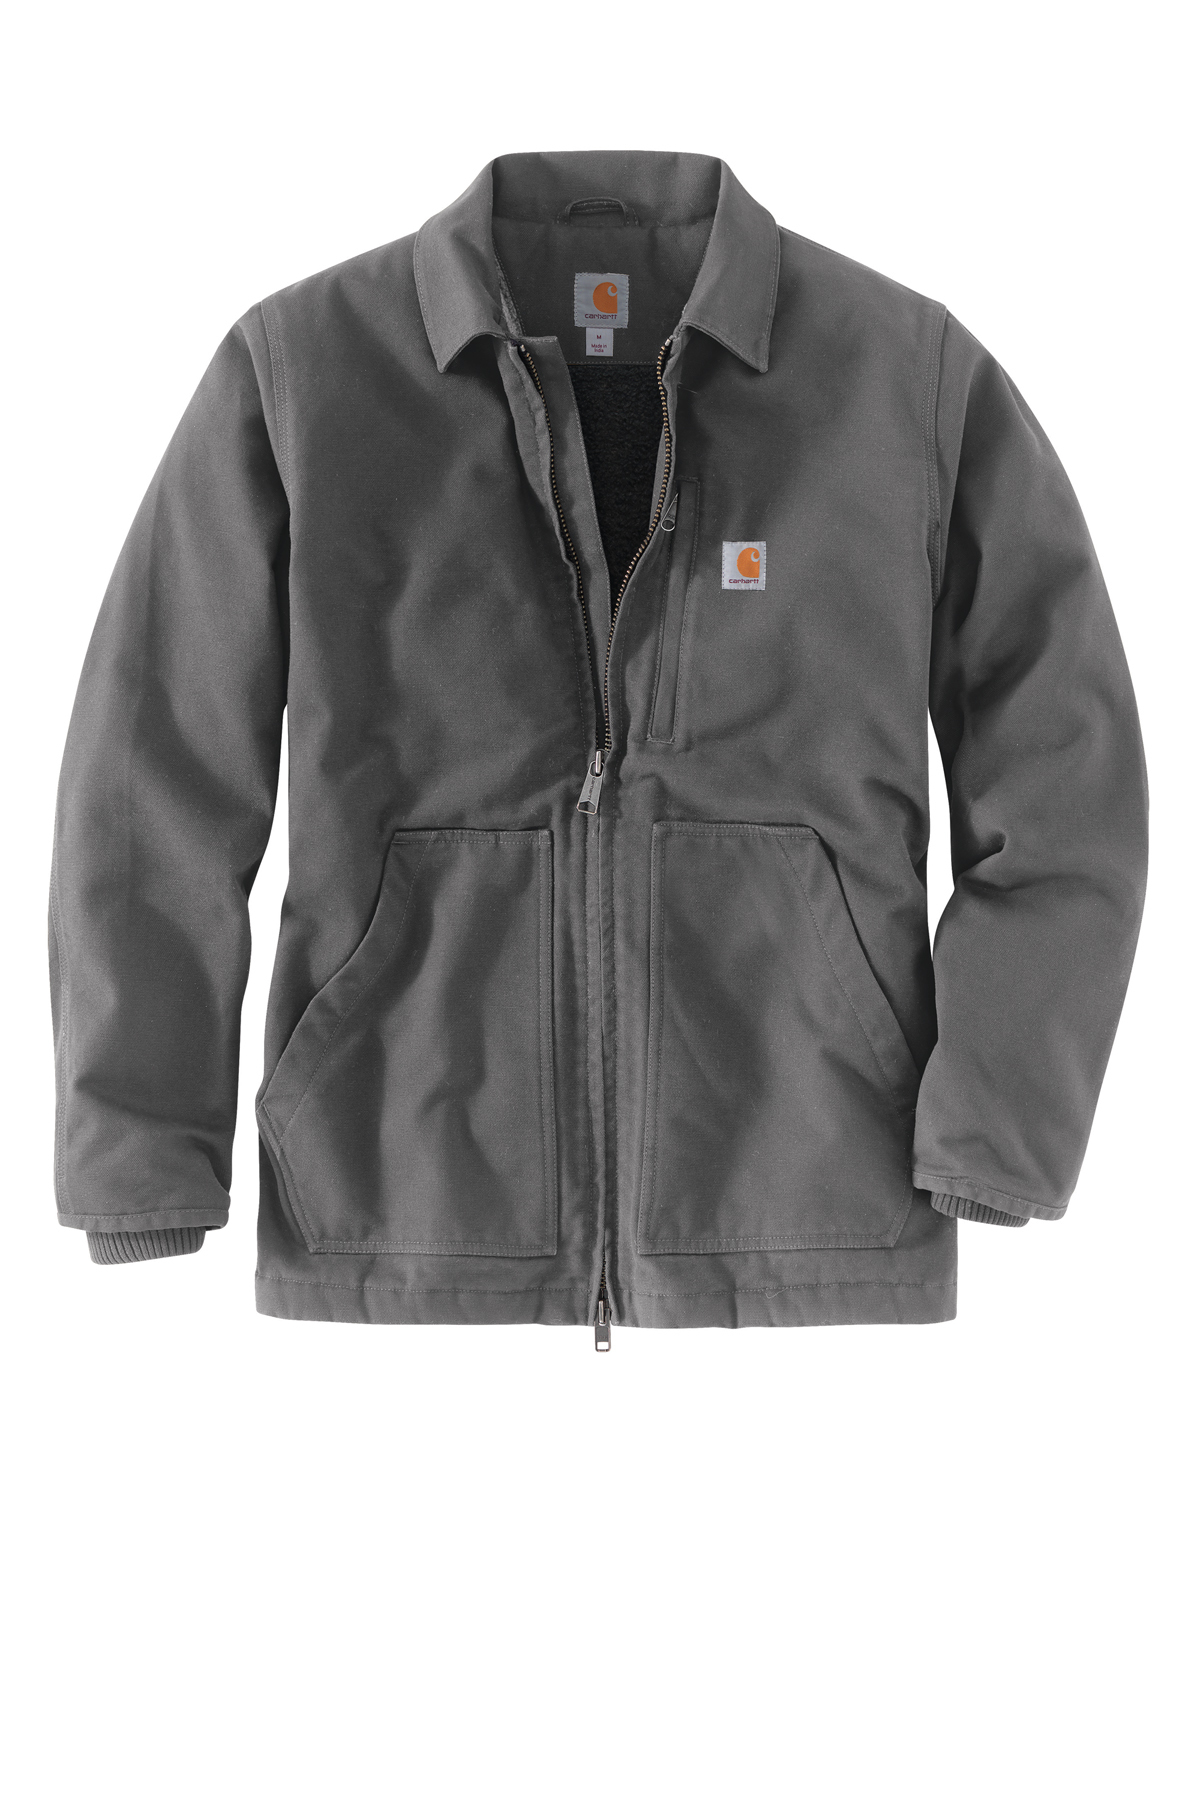 Carhartt Sherpa-Lined Coat | Product | SanMar